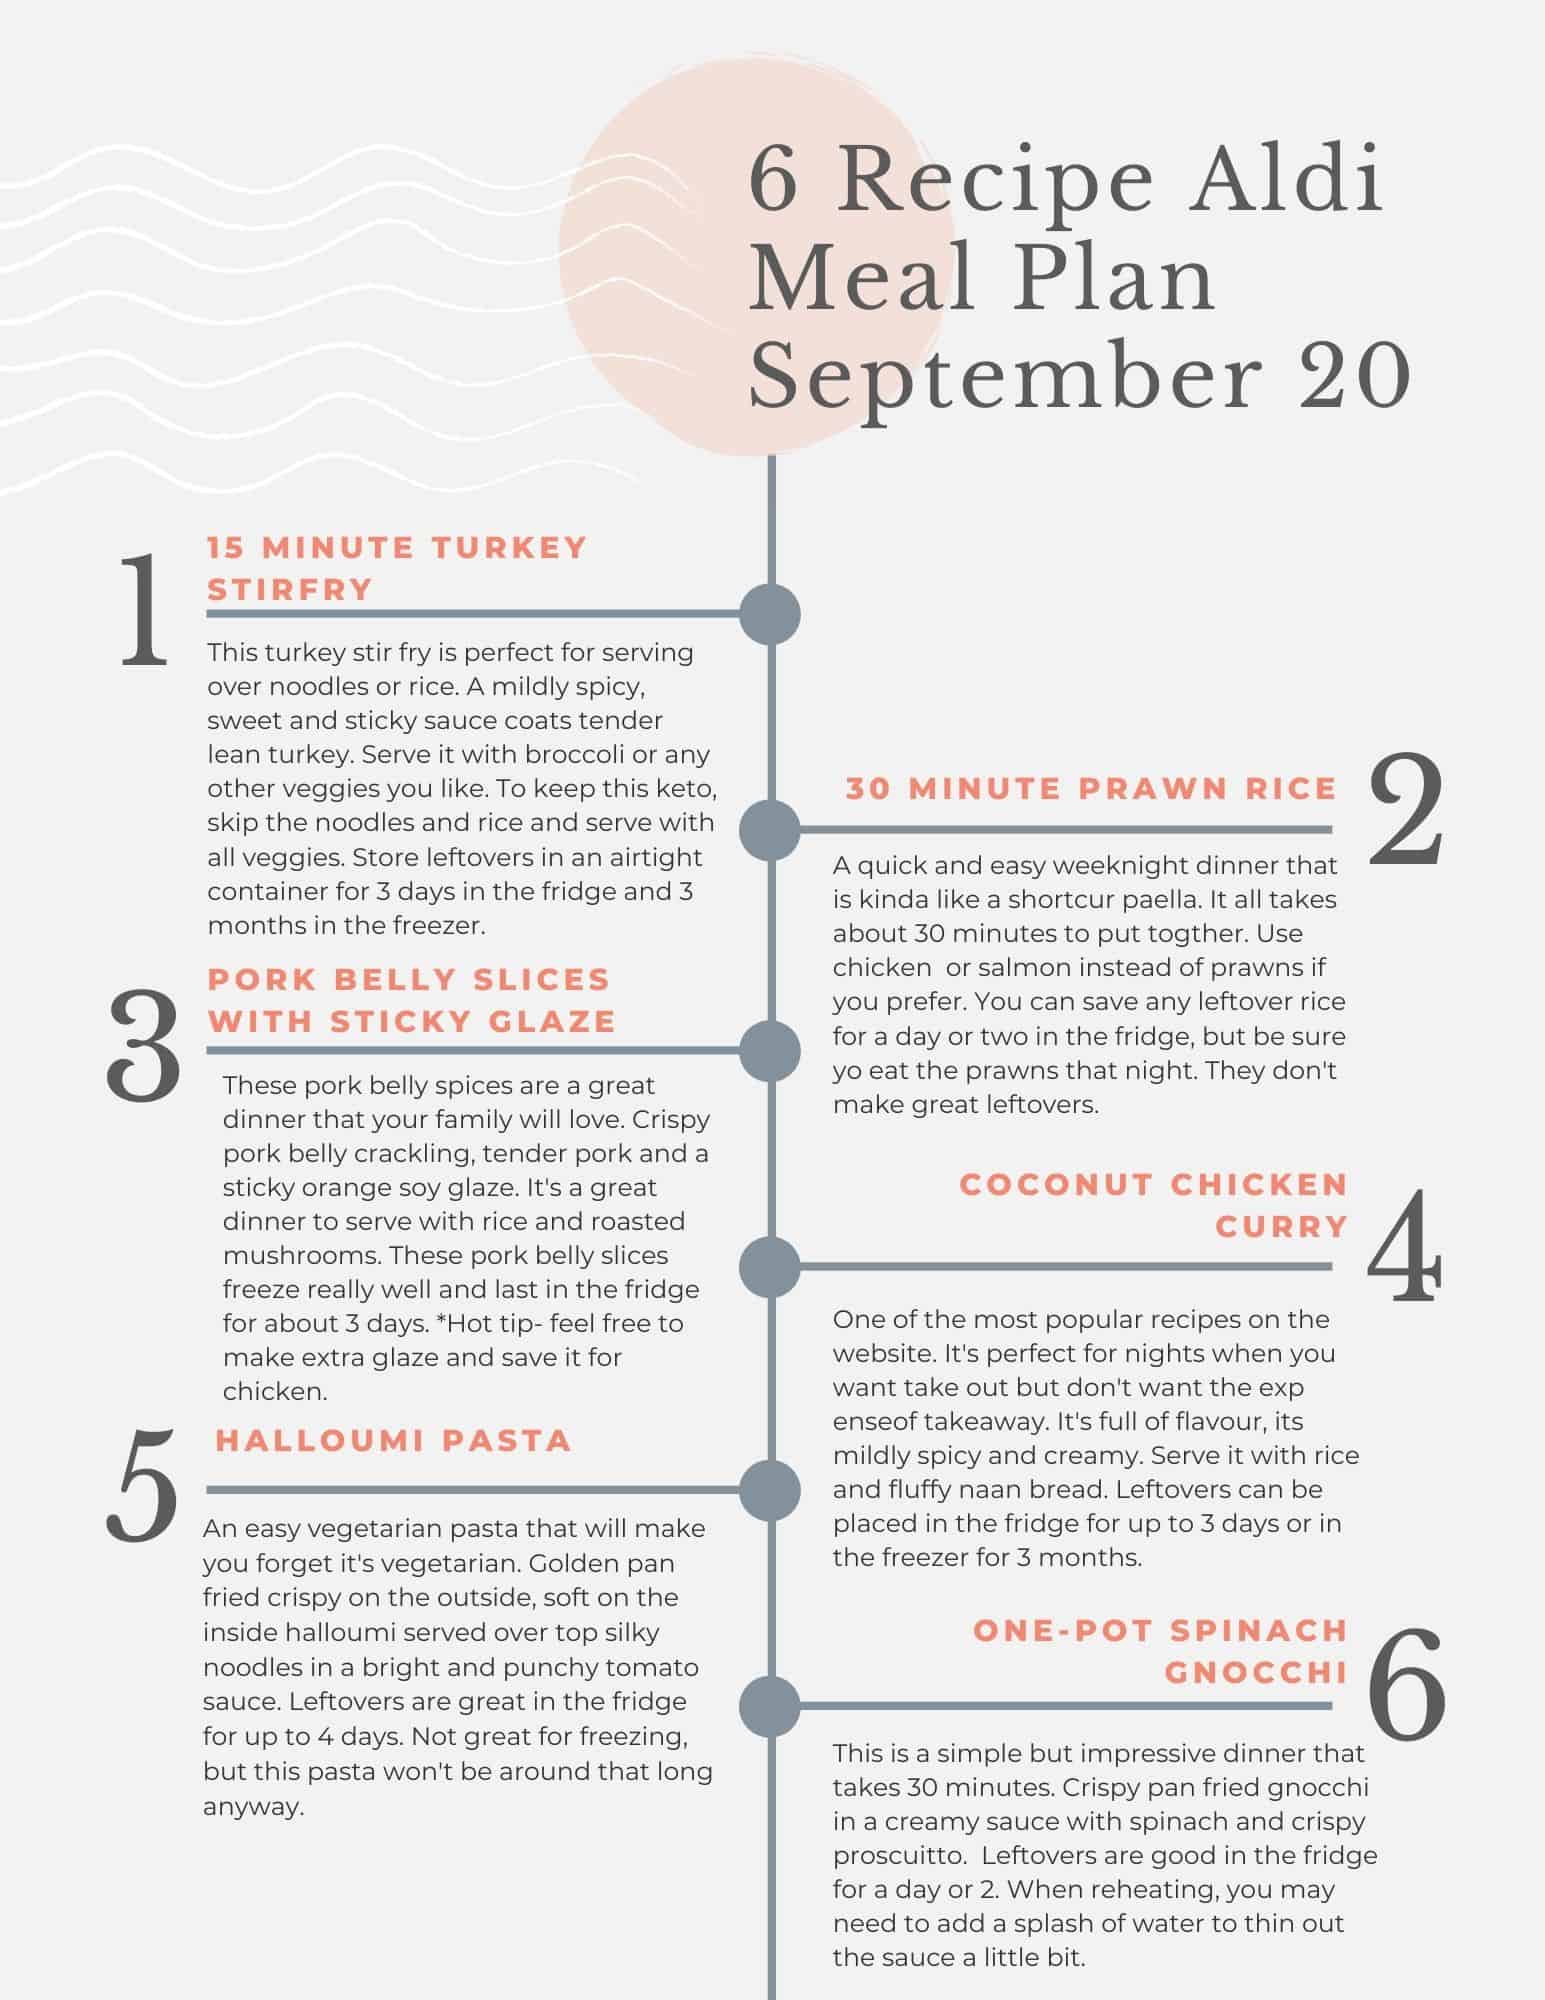 Aldi budget meal plan tip sheet.